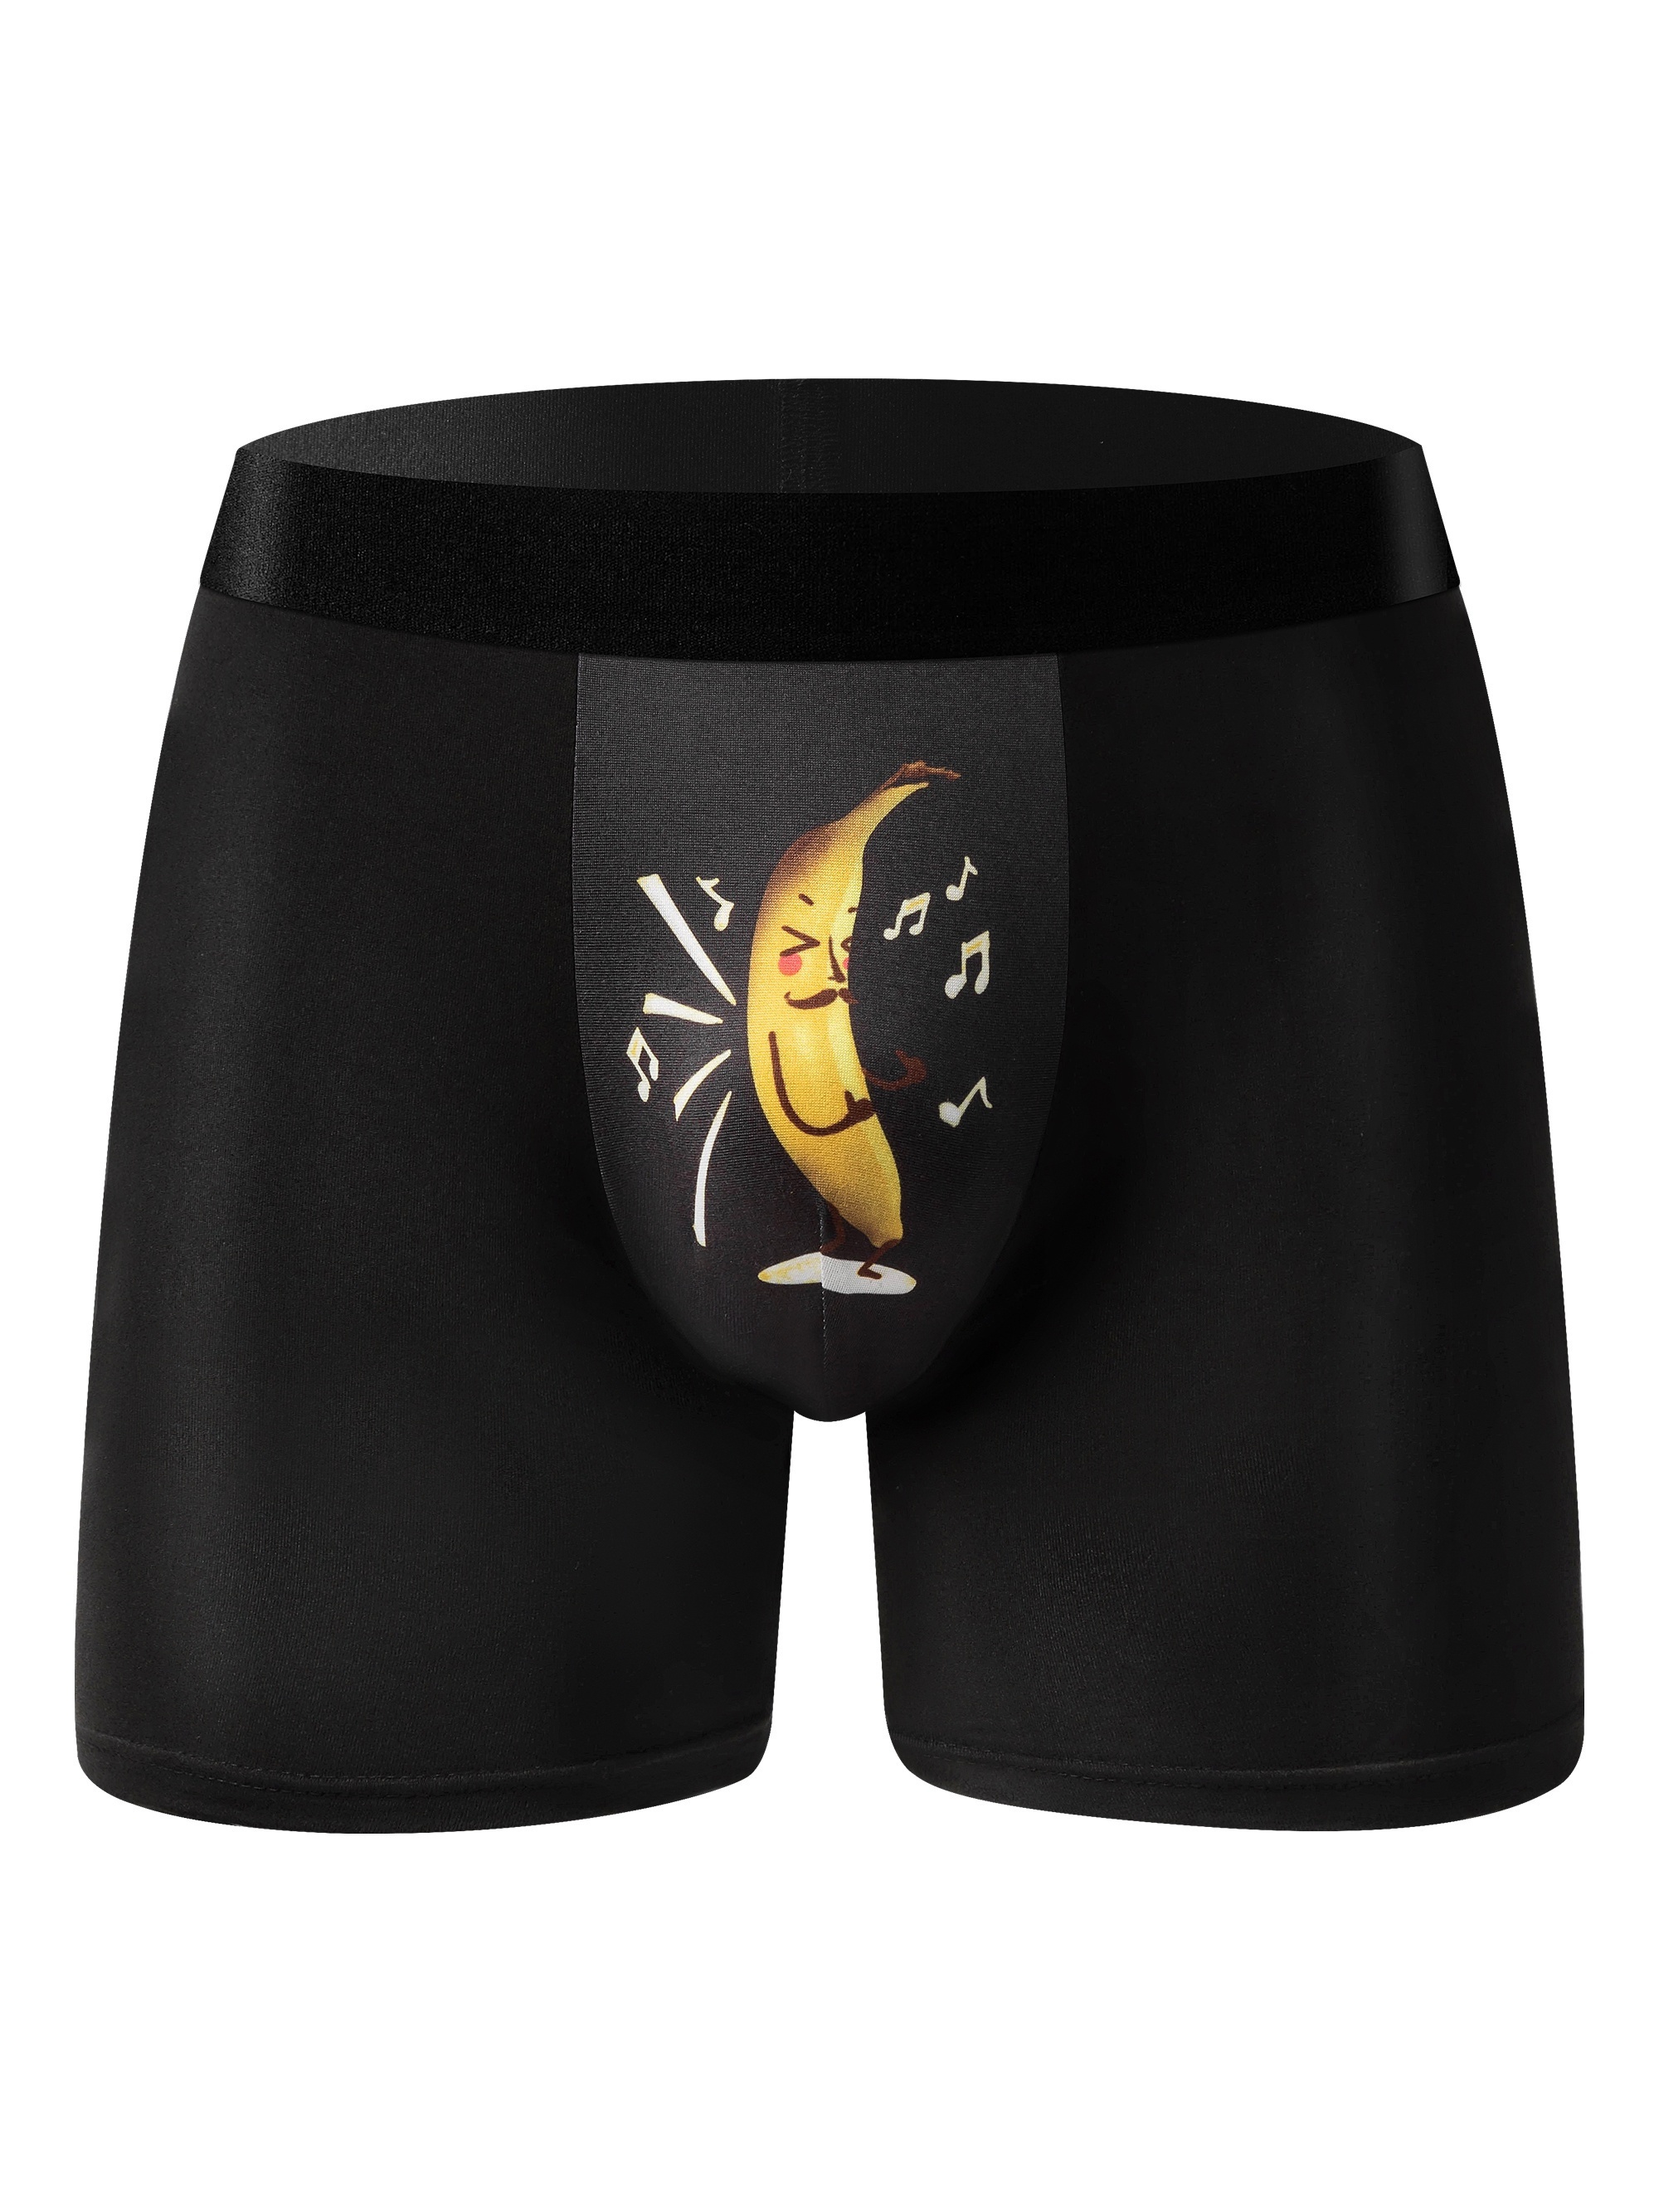 Funny Cartoon Underpants Breathbale Panties spoof funny Male Underwear  Boxer Briefs extended underwear - AliExpress